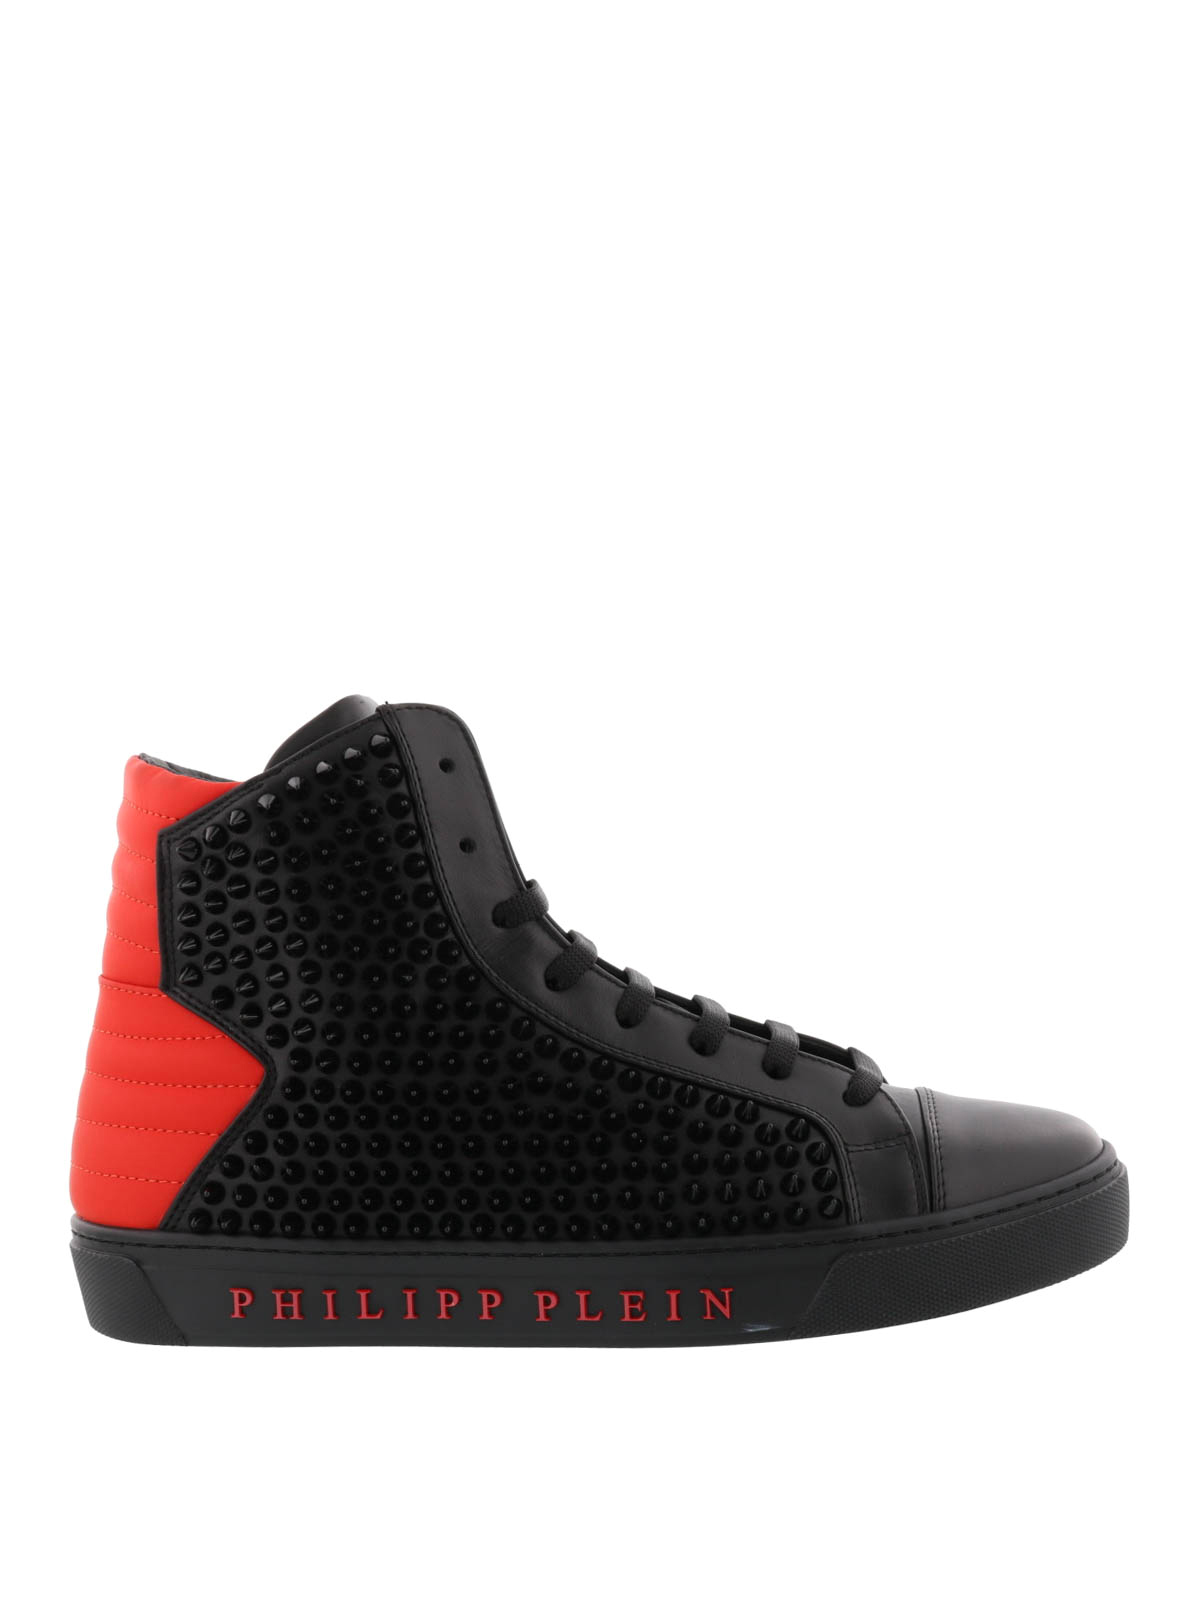 philipp plein studded sneakers